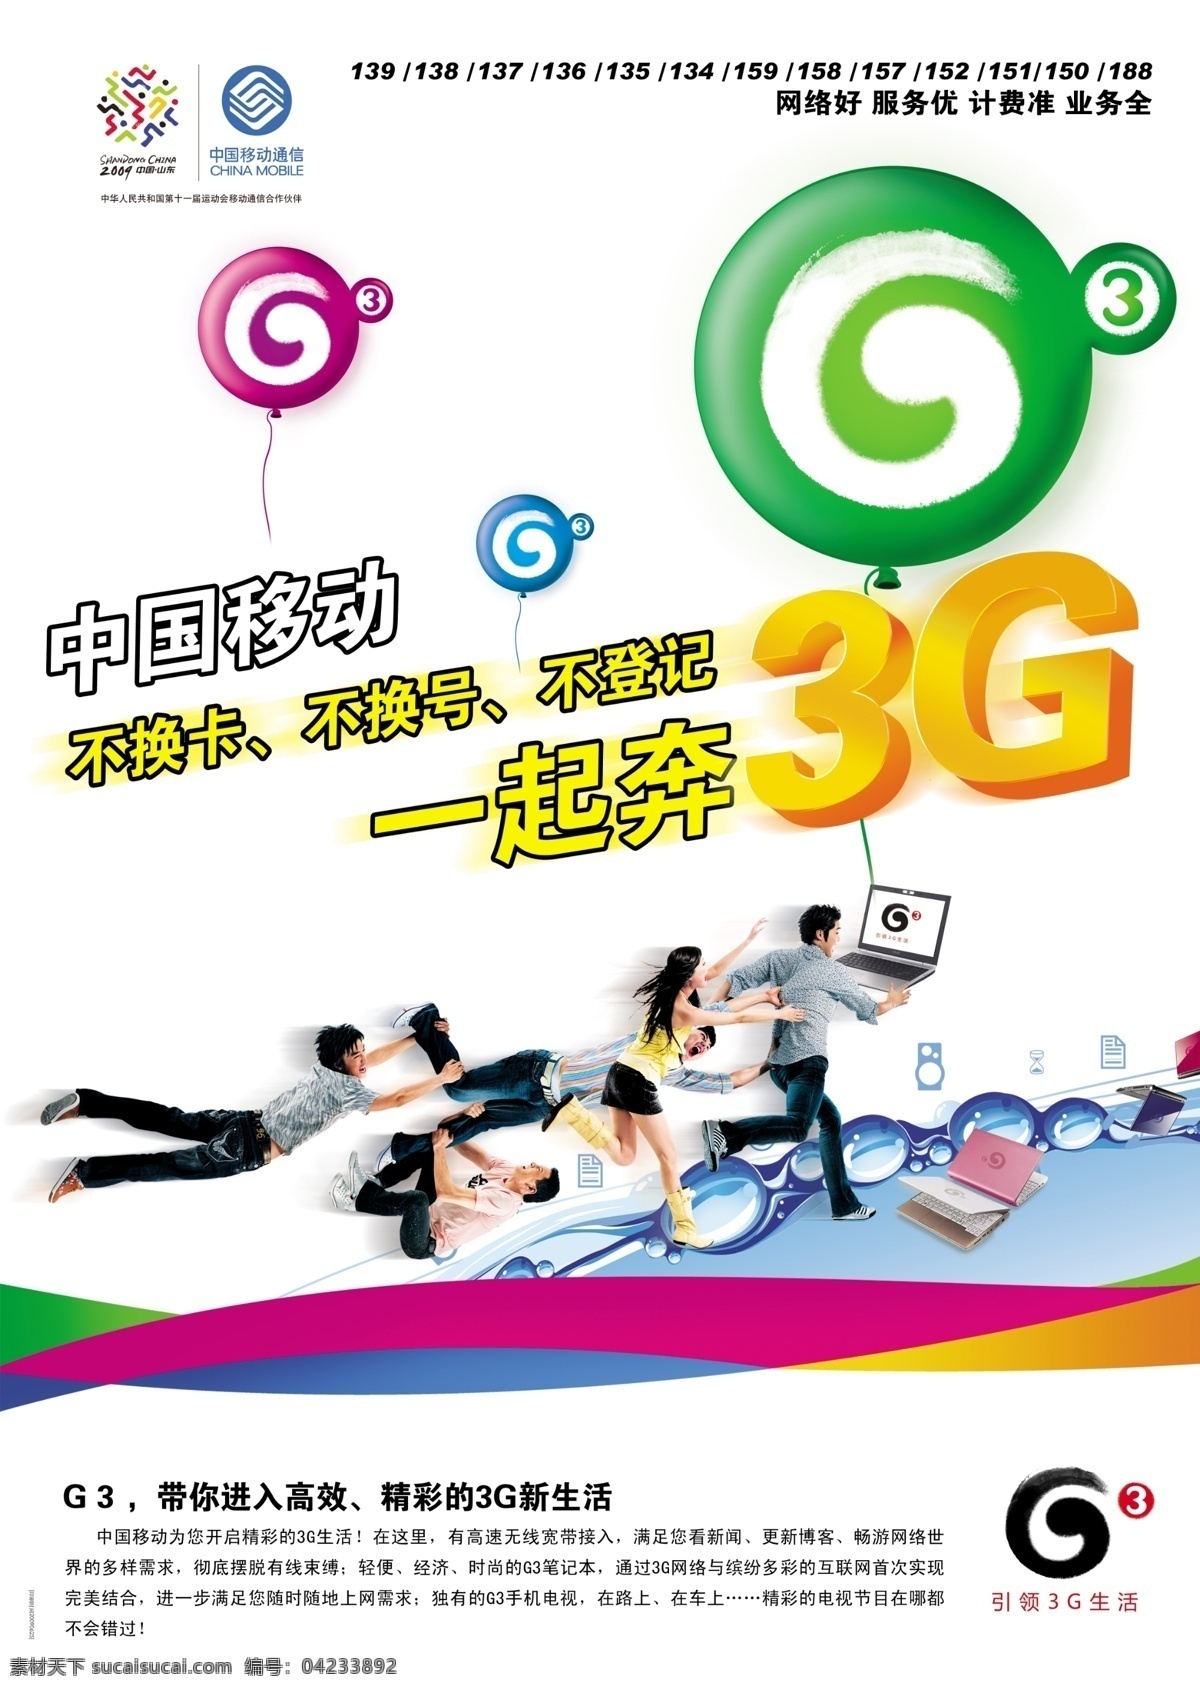 g3 广告设计模板 源文件库 中国移动 g3素材下载 g3模板下载 不换卡 不换号 不登记 一起奔3g g3笔记本 其他海报设计